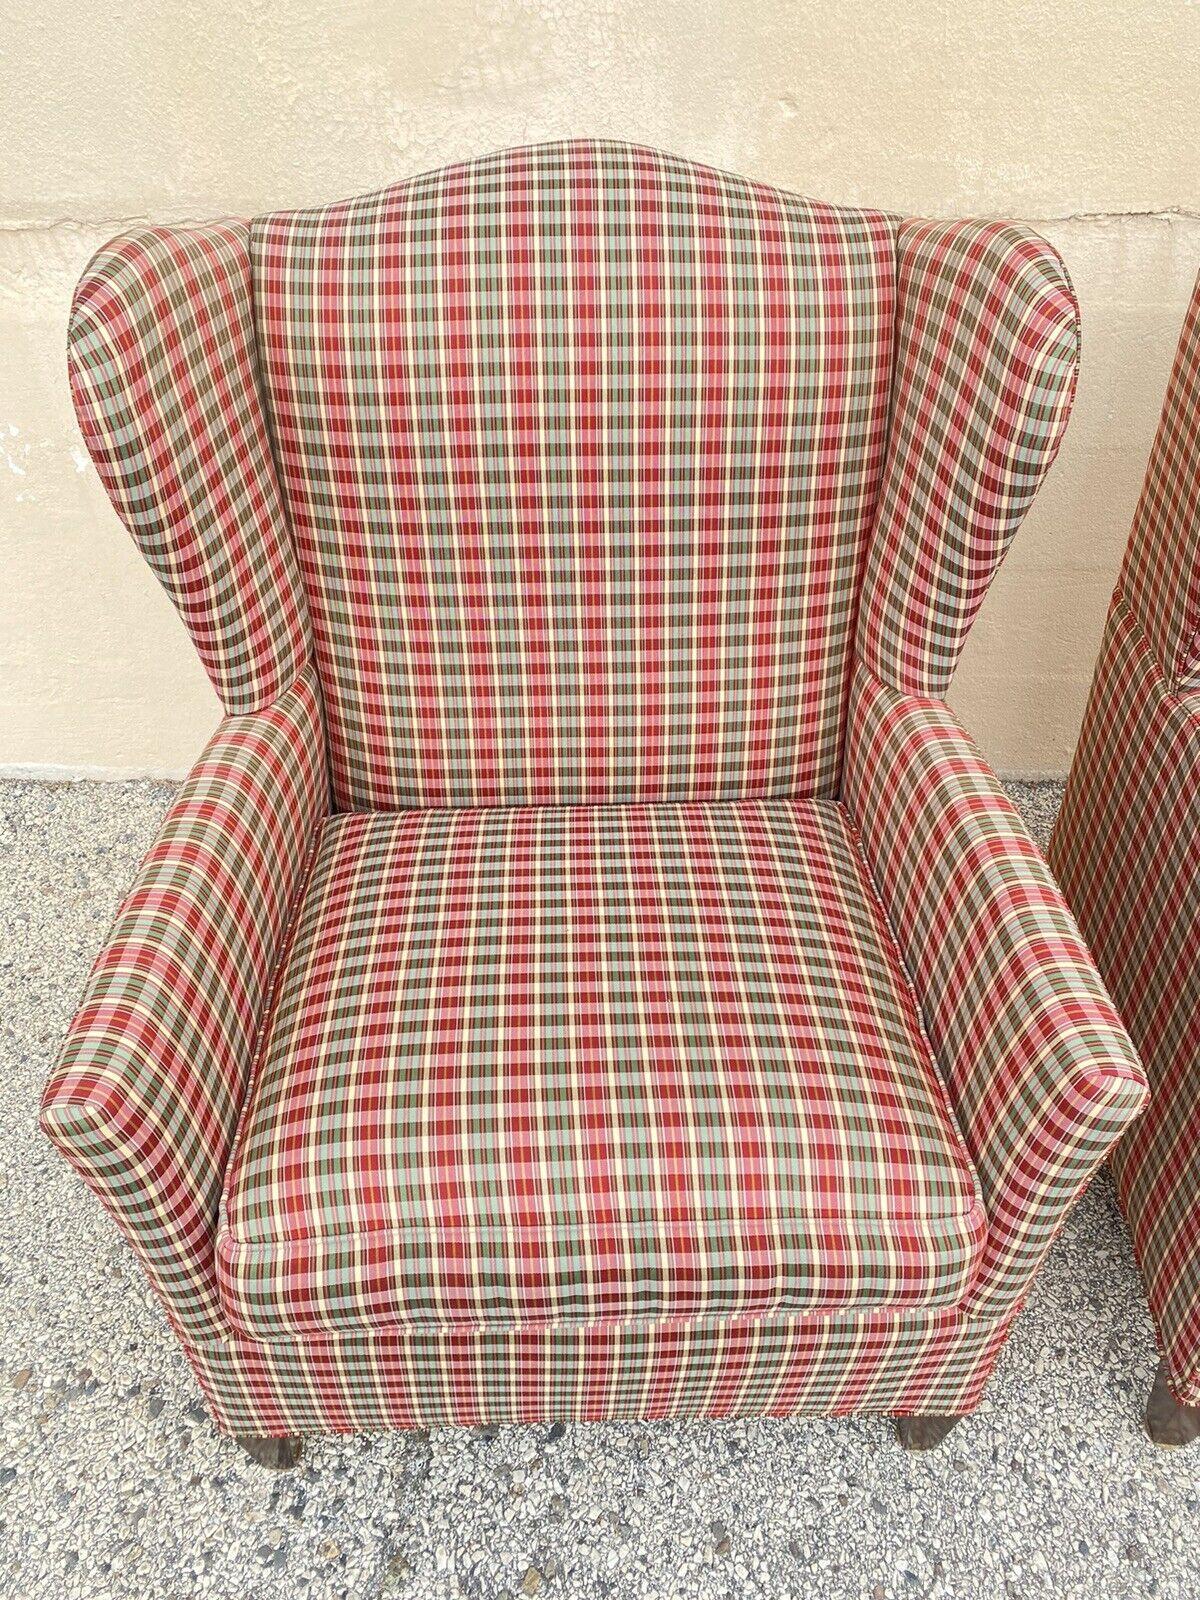 red plaid armchair